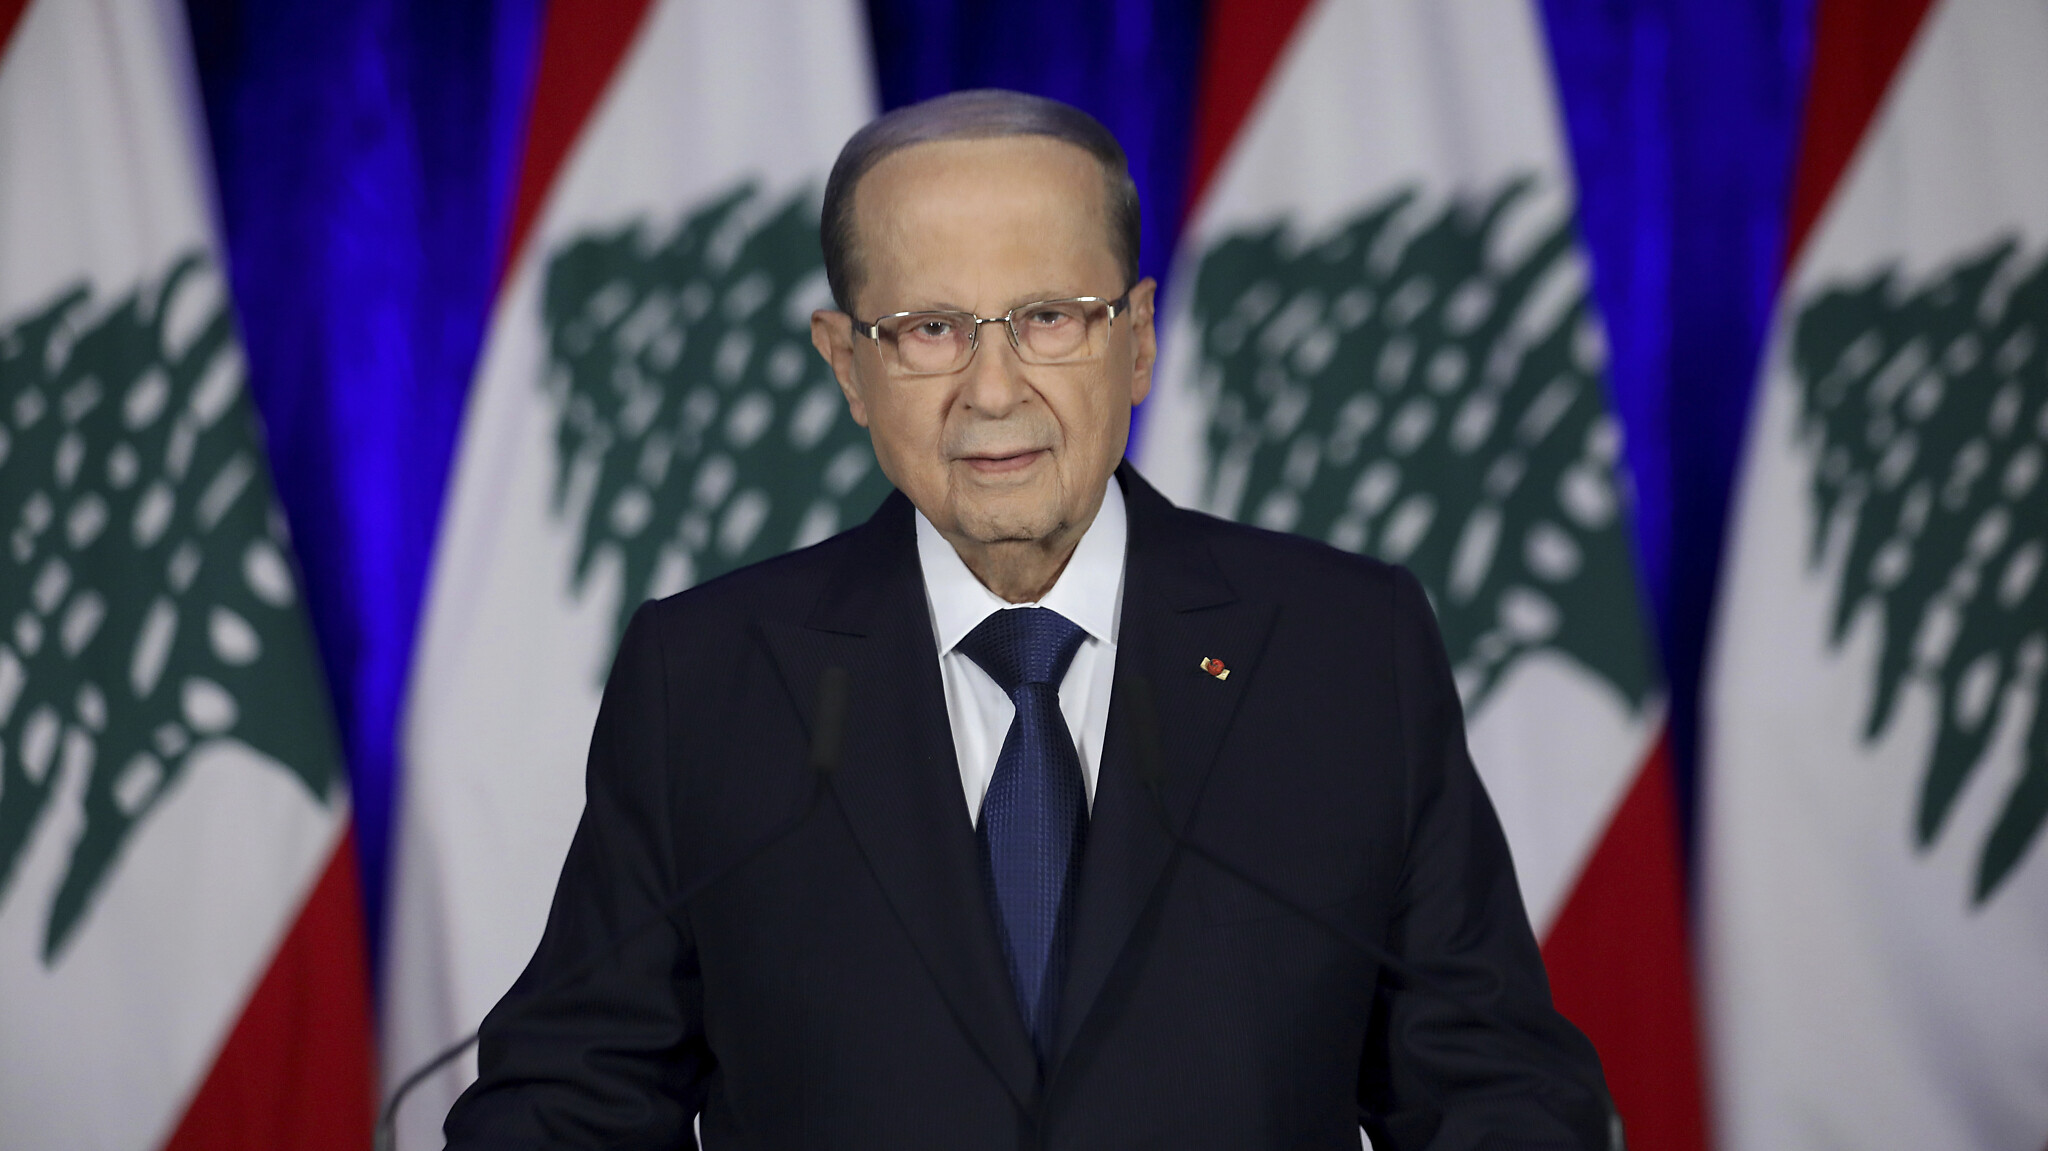 Lebanon's Hariri Arrives at Presidential Palace as PM Consultations Begin